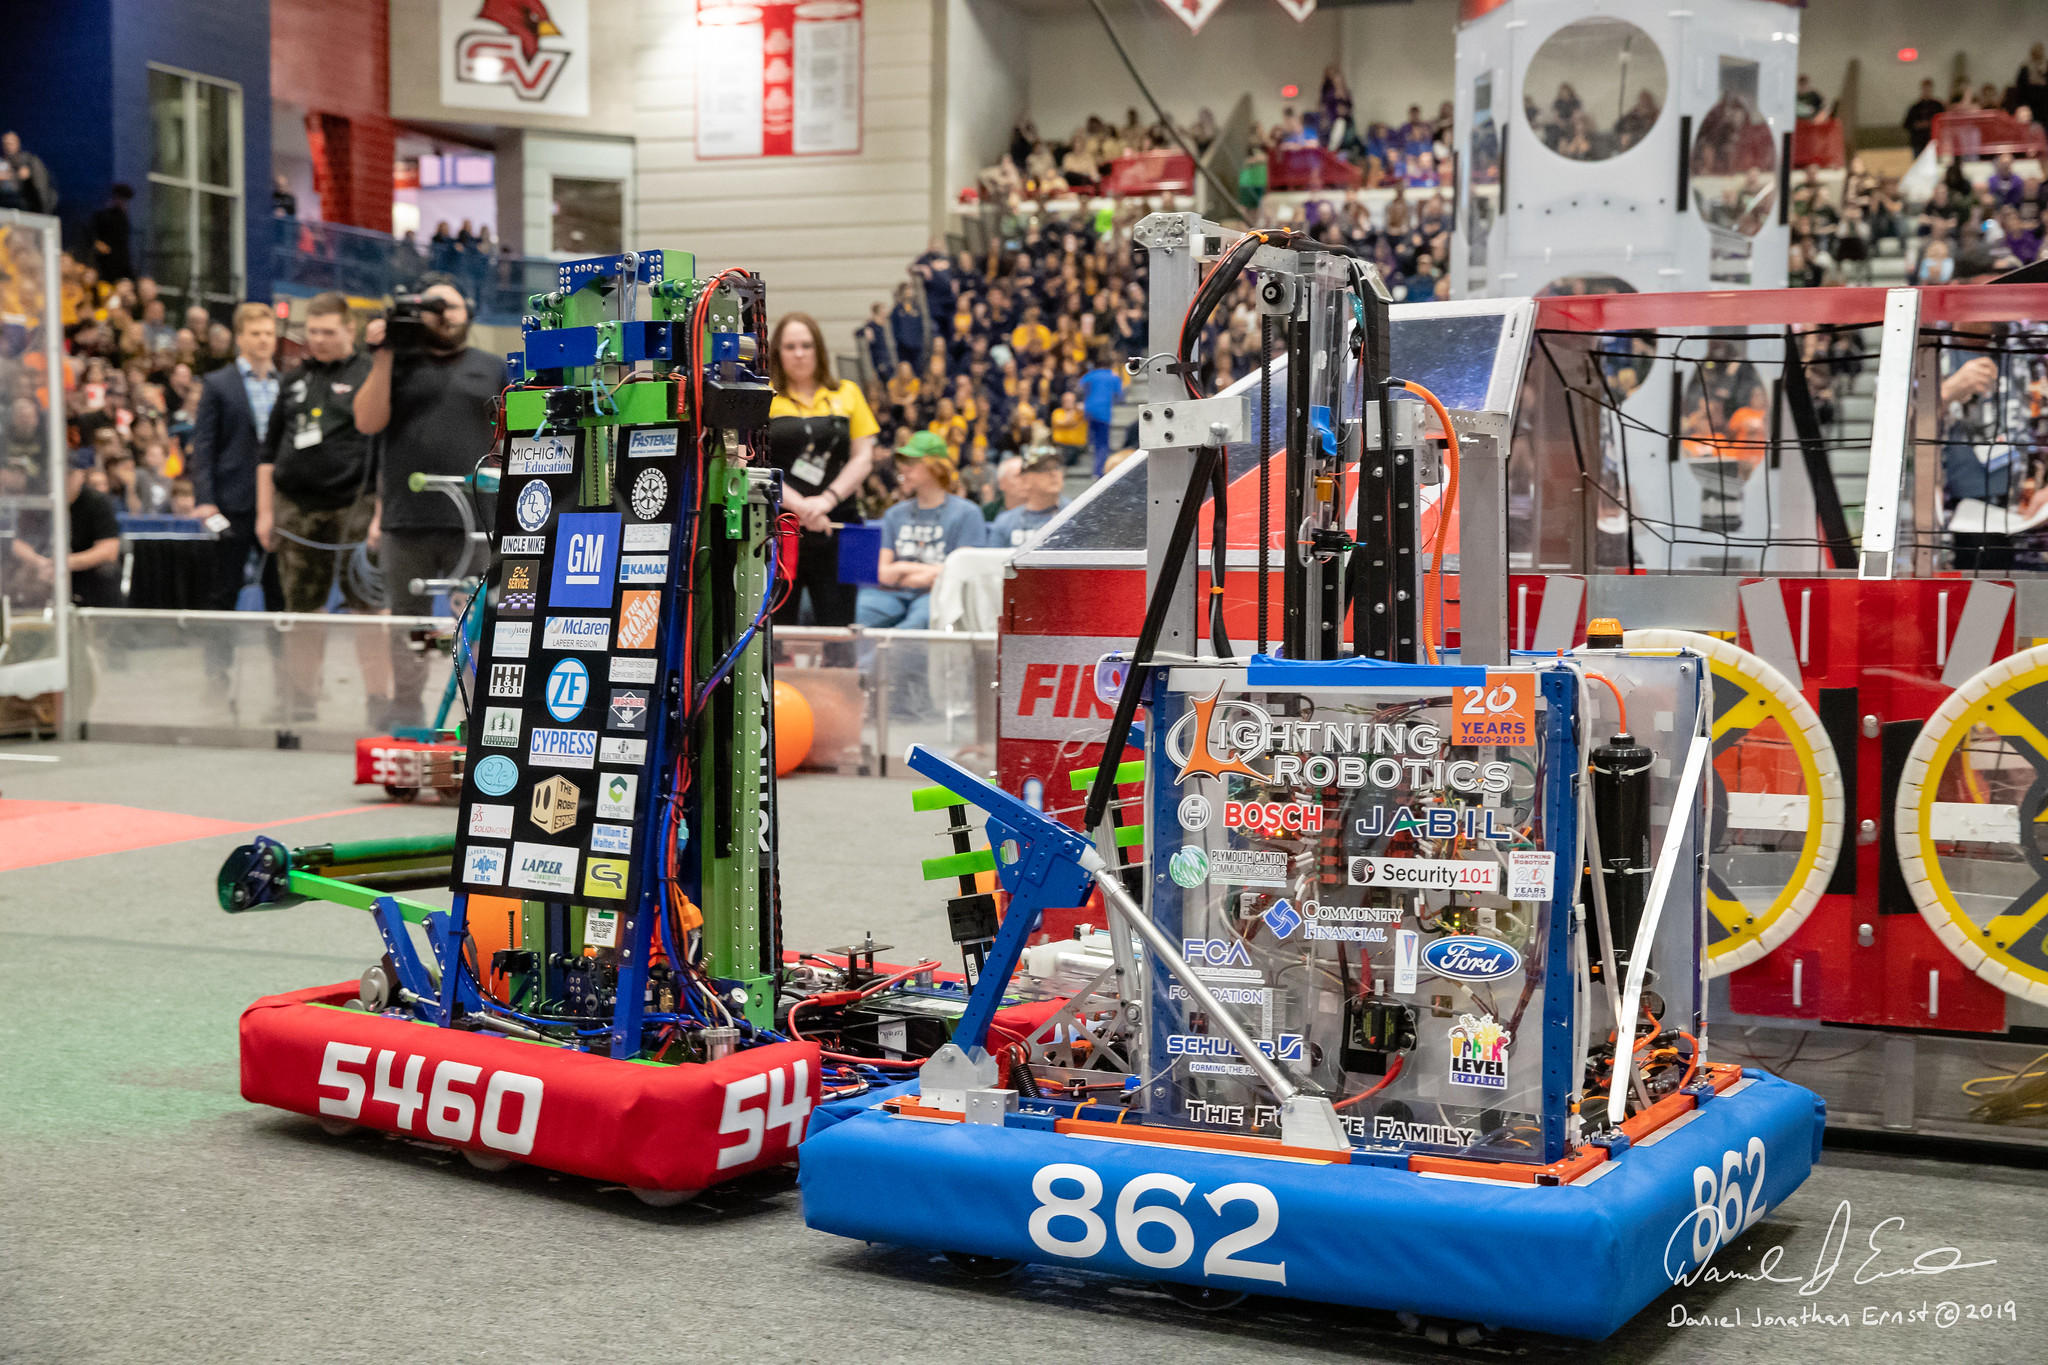 Stateside World robotics championship in Detroit; Pence visits MI